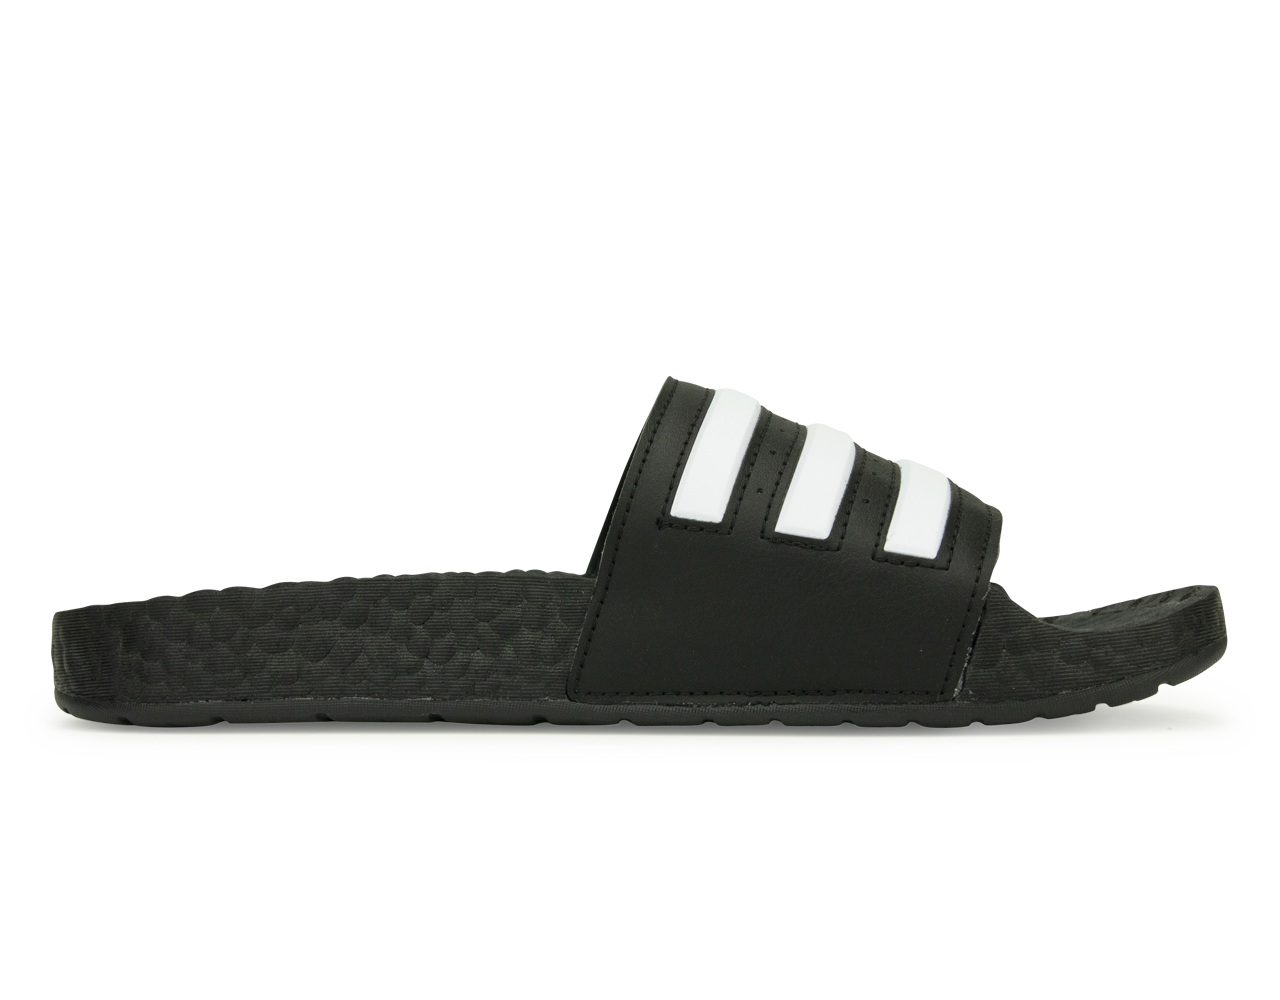 adidas Men's Adilette Boost Sandals Black/White Side